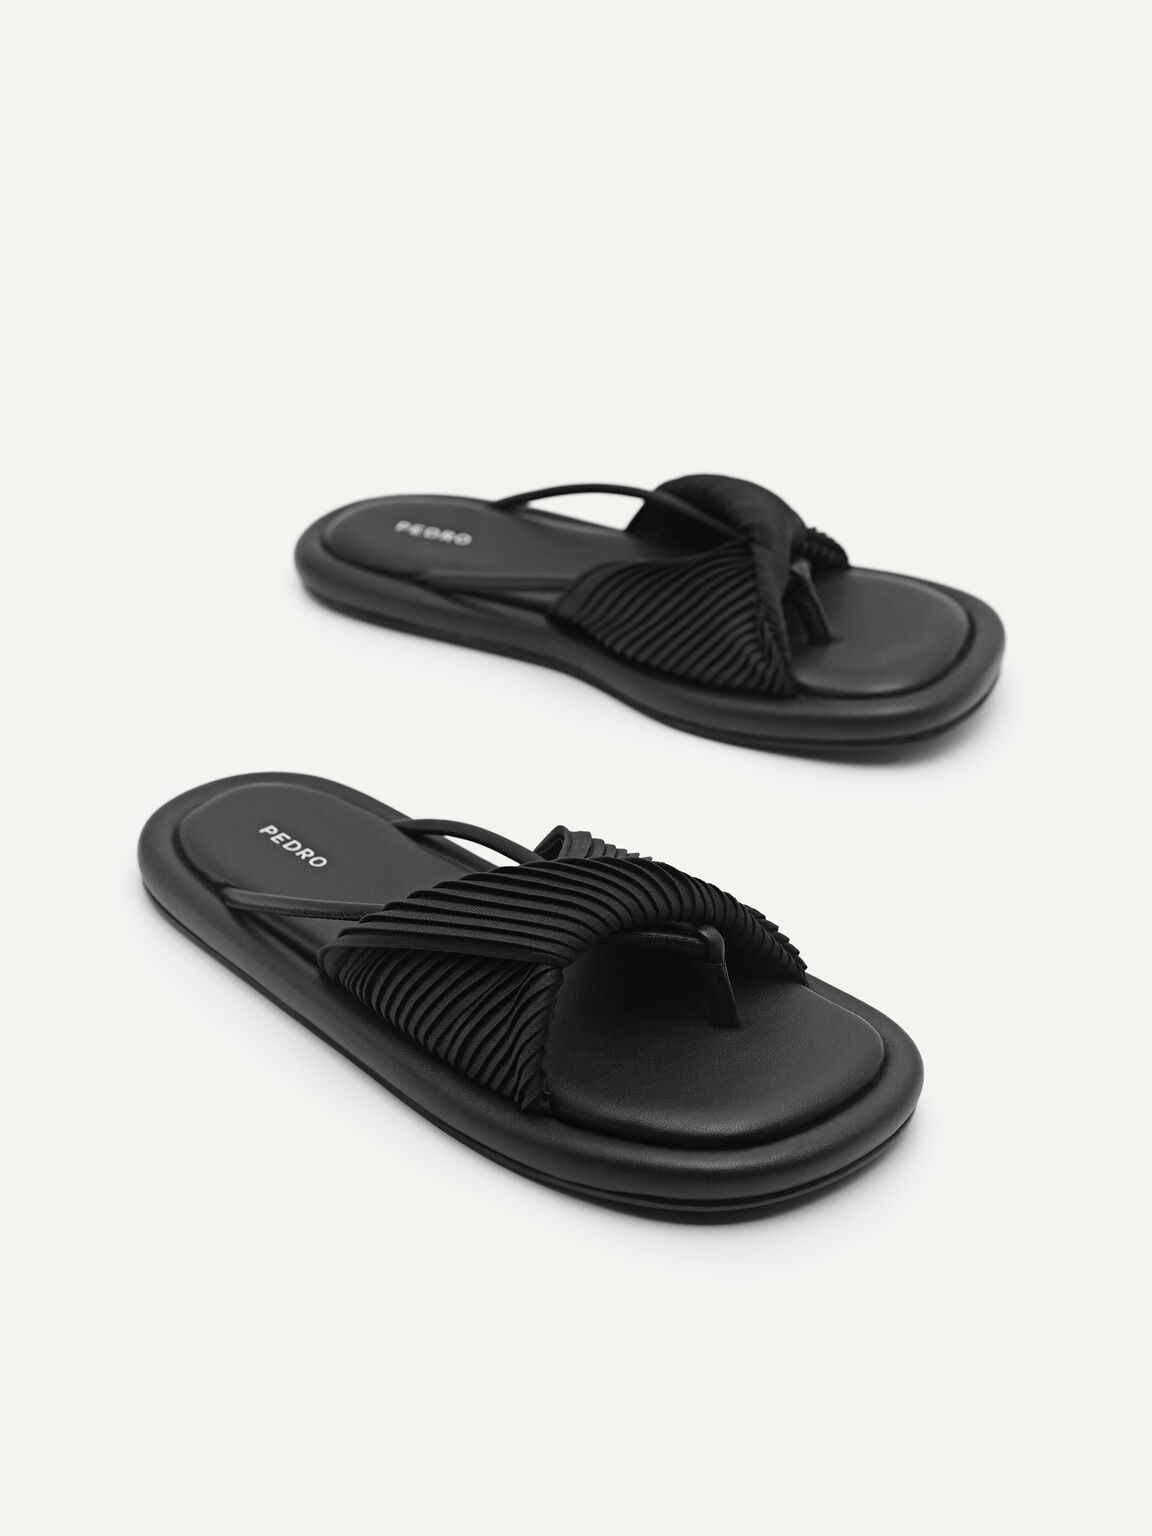 rePEDRO Pleated Sandals, Black, hi-res